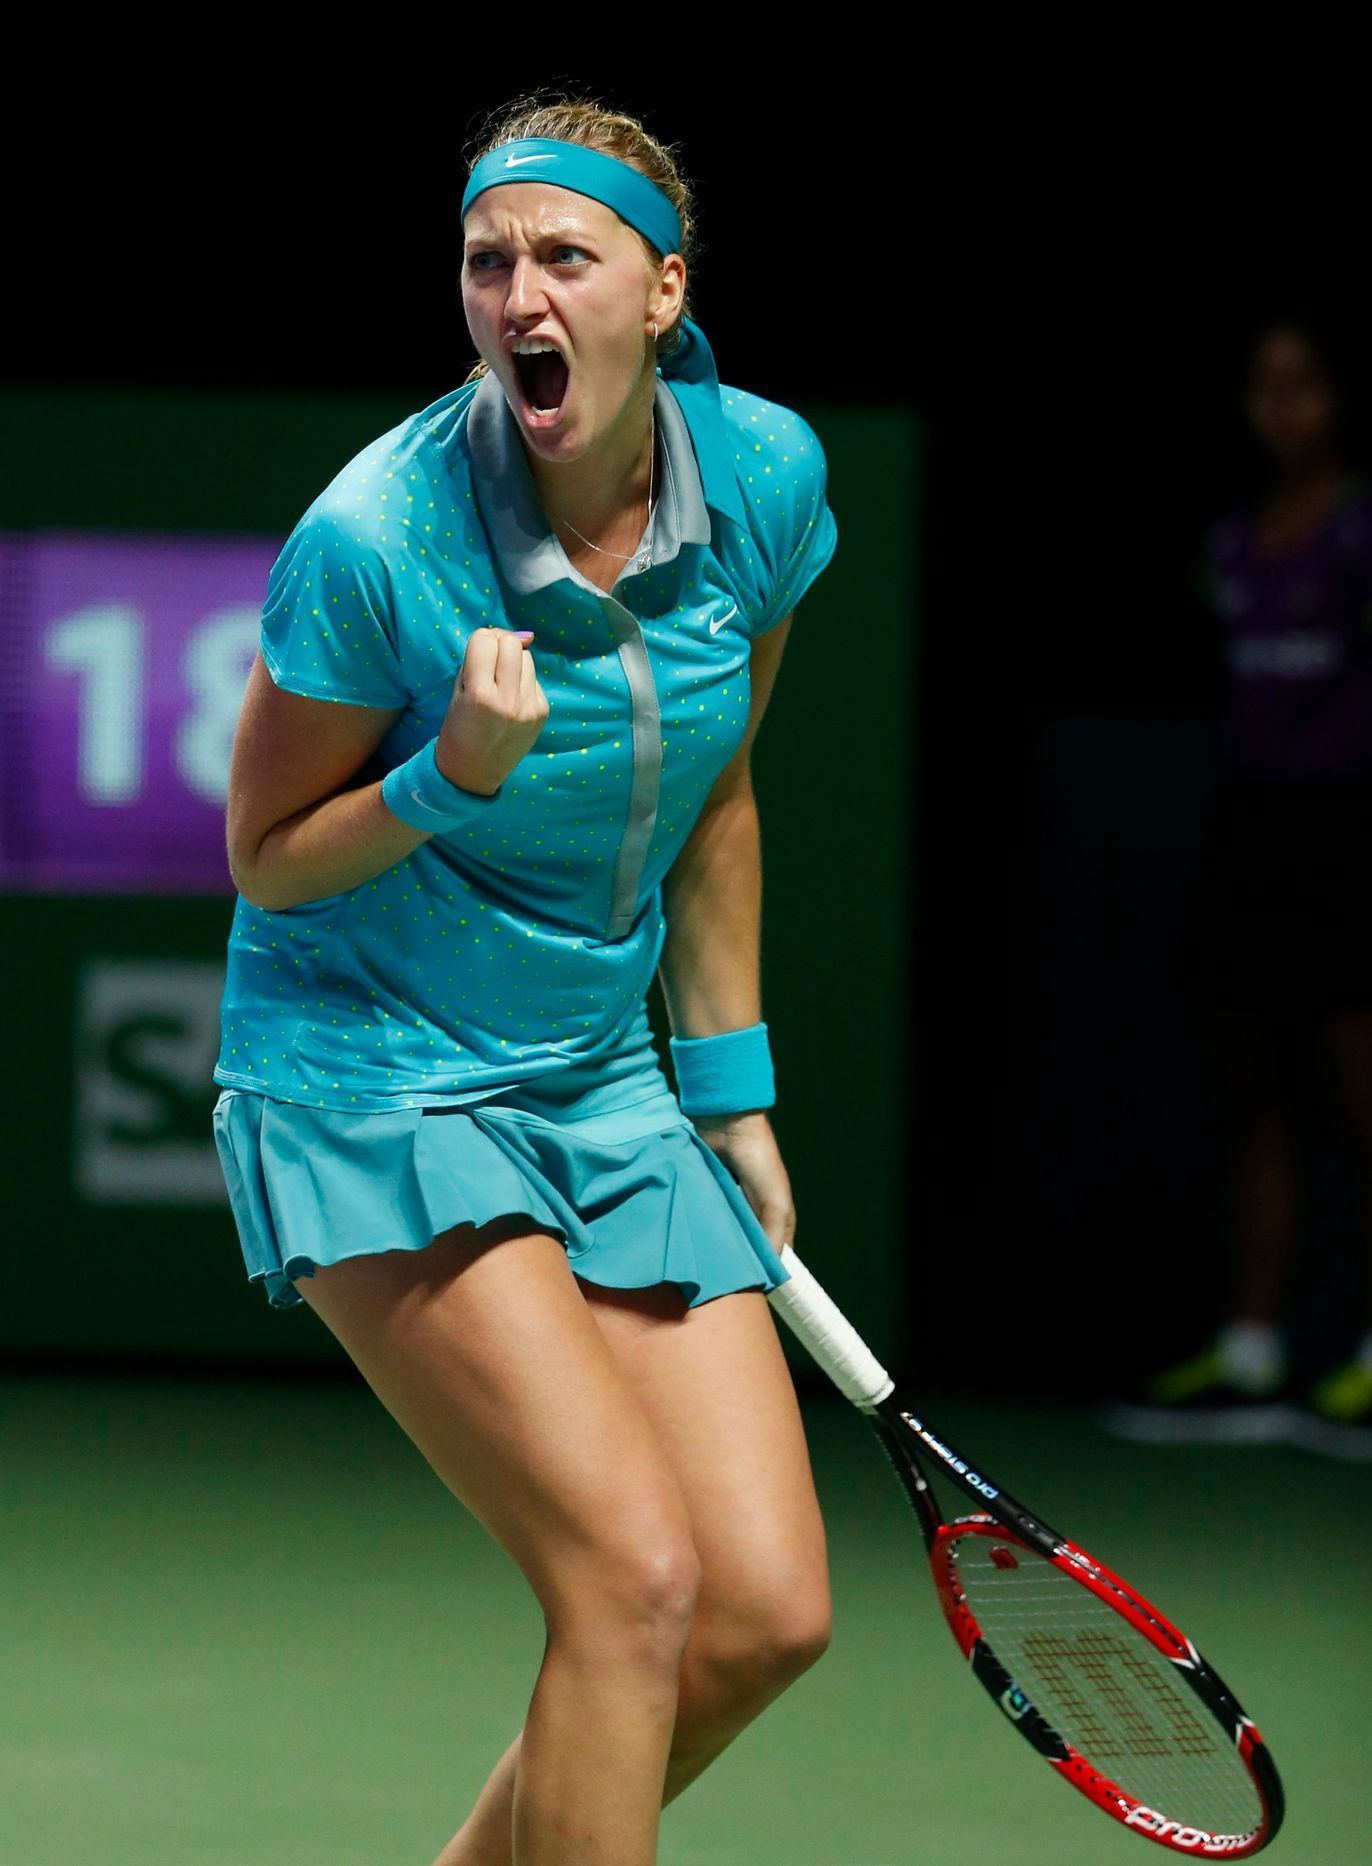 Petra Kvitova of the Czech Republic celebrates a point against Maria Sharapova of Russia during their WTA Finals singles tennis match at the Singapore Indoor Stadium